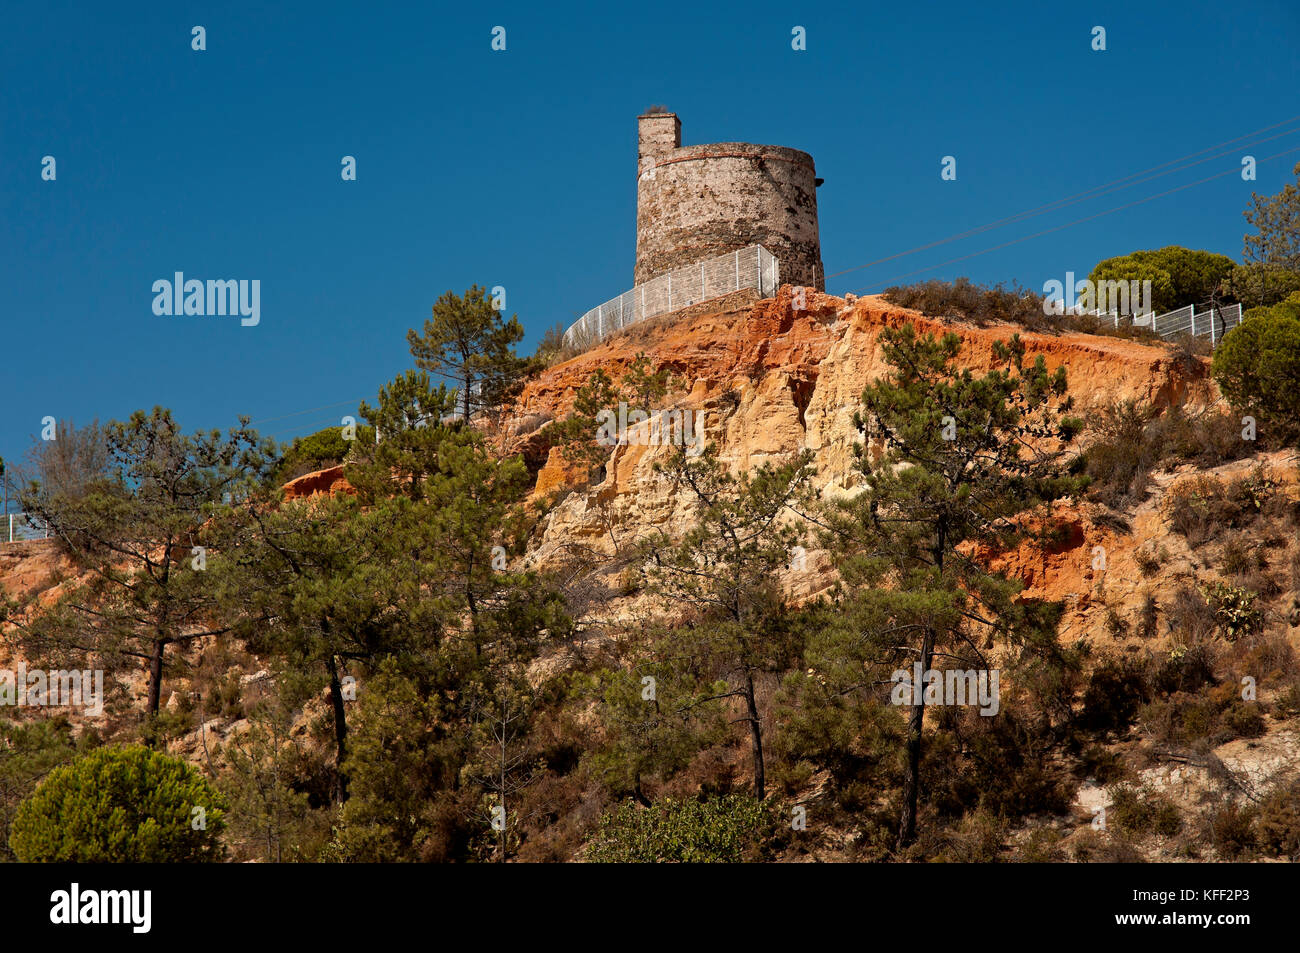 Catalan tower (16th century), Lepe, Huelva province, Region of Andalusia, Spain, Europe Stock Photo